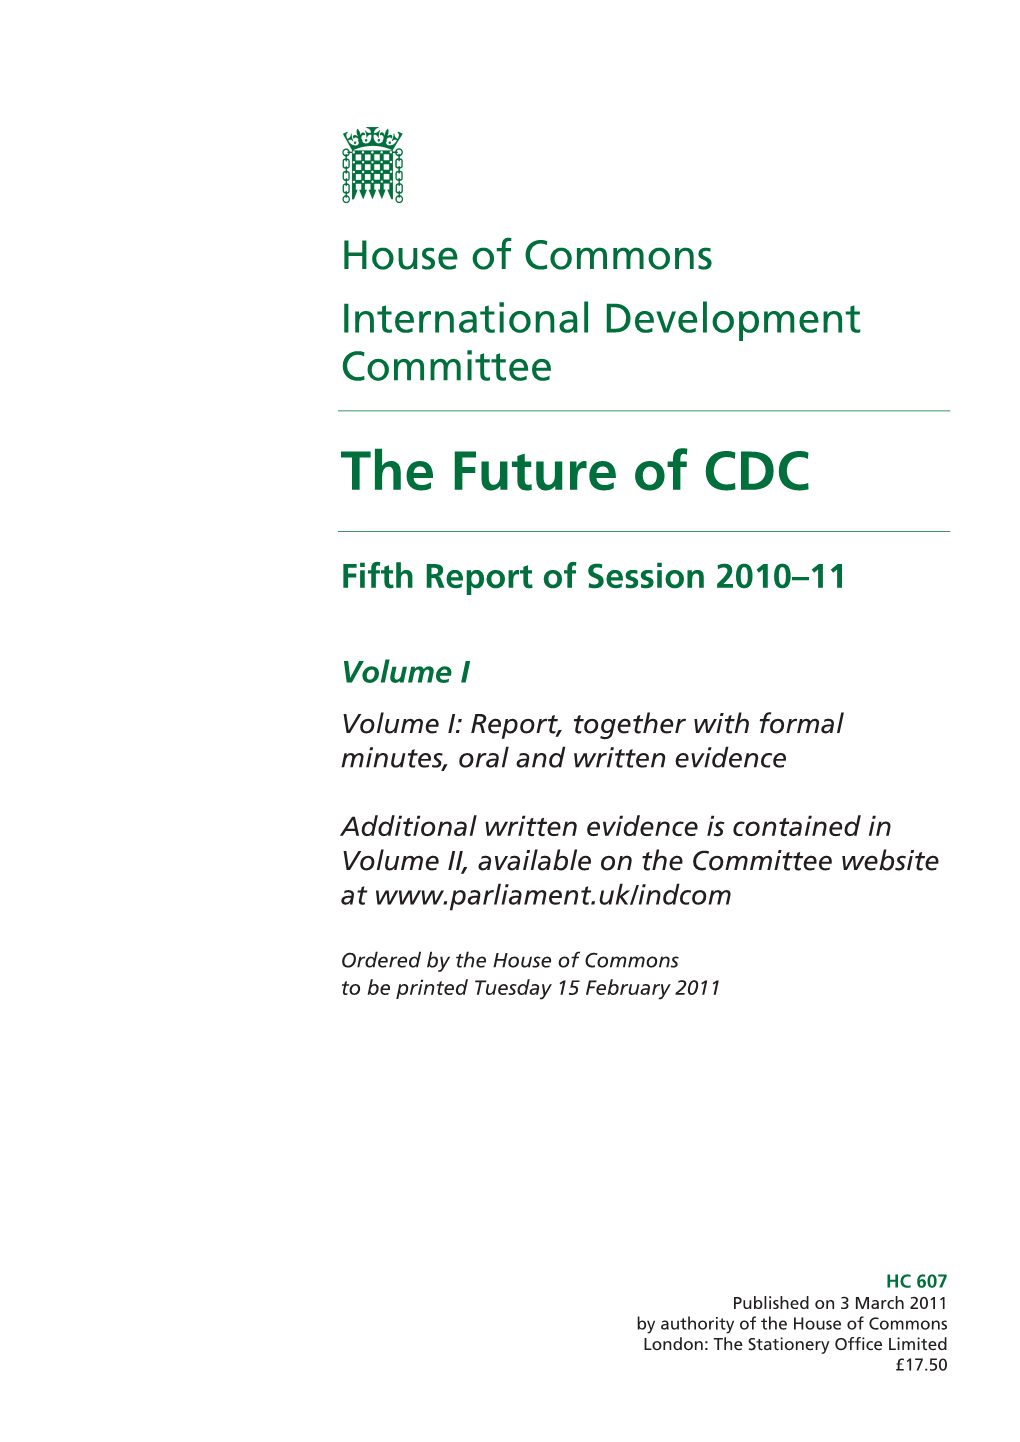 The Future of CDC